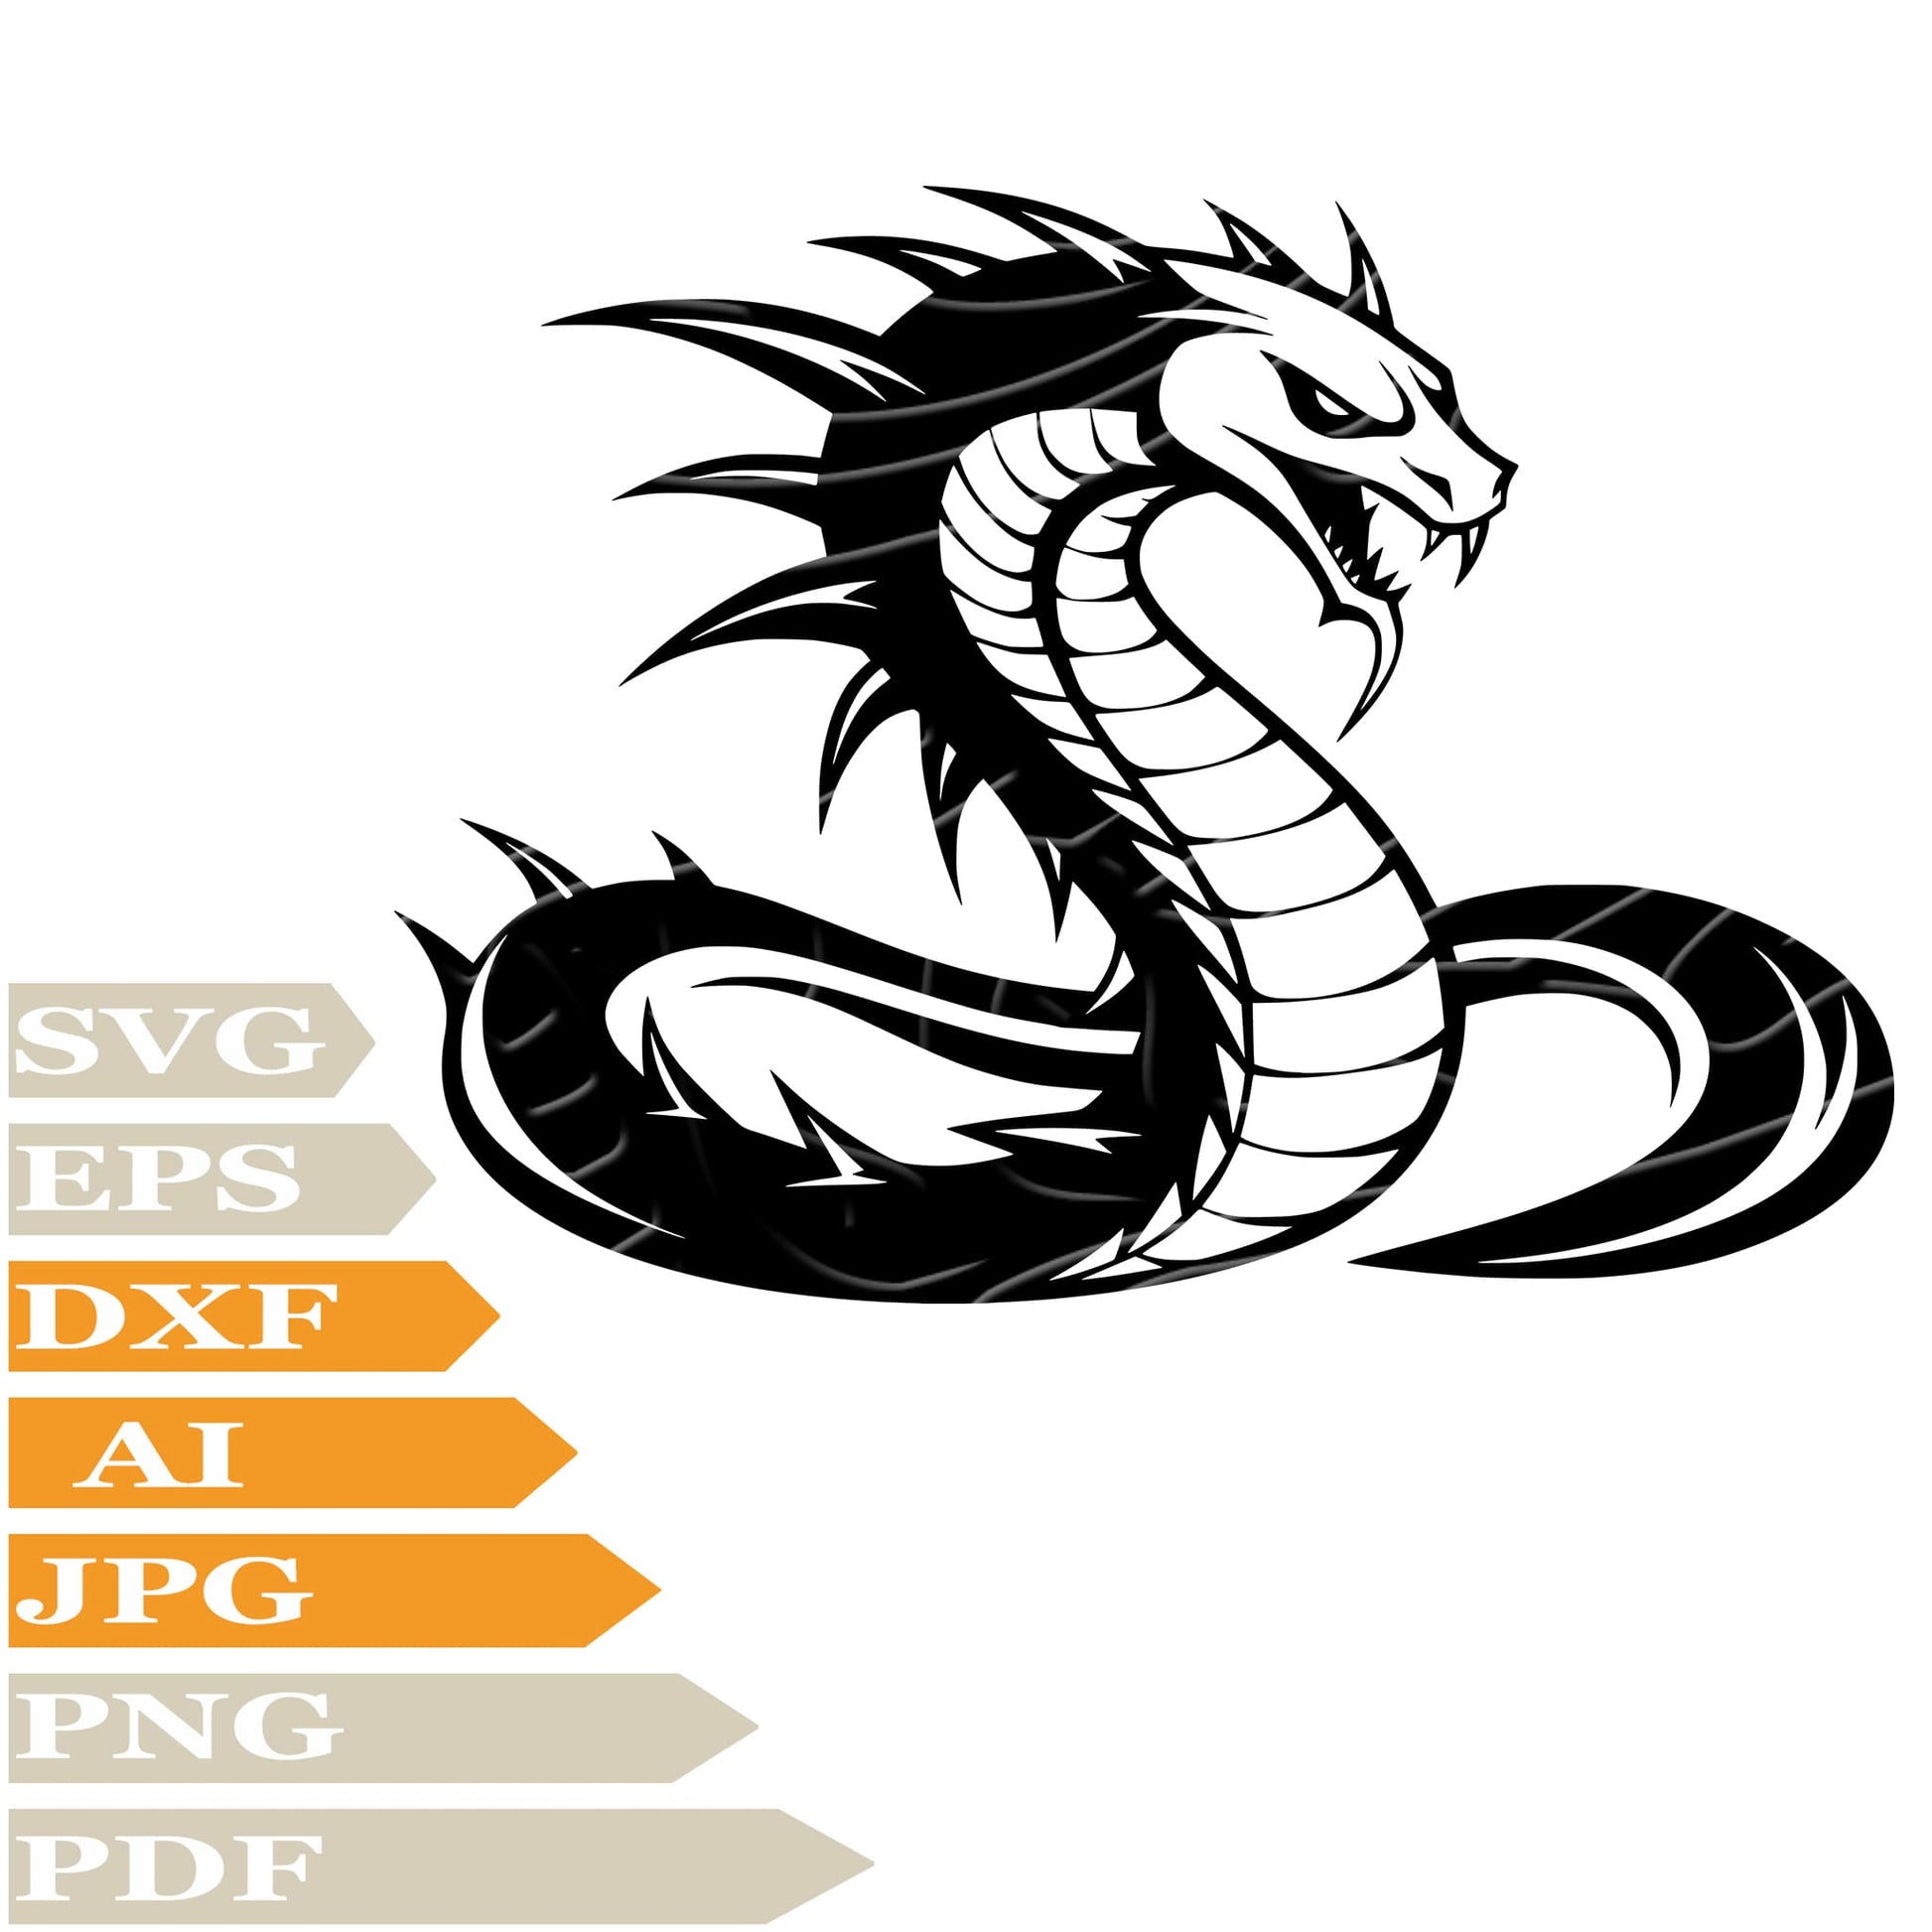 Dragon SVG File, Angry Dragon SVG Design, Dragon SVG Cricut, Evil Dragon Digital Vector, PNG, Image Cut, Clipart, Cut File, Print, Decal, Shirt, Silhouette